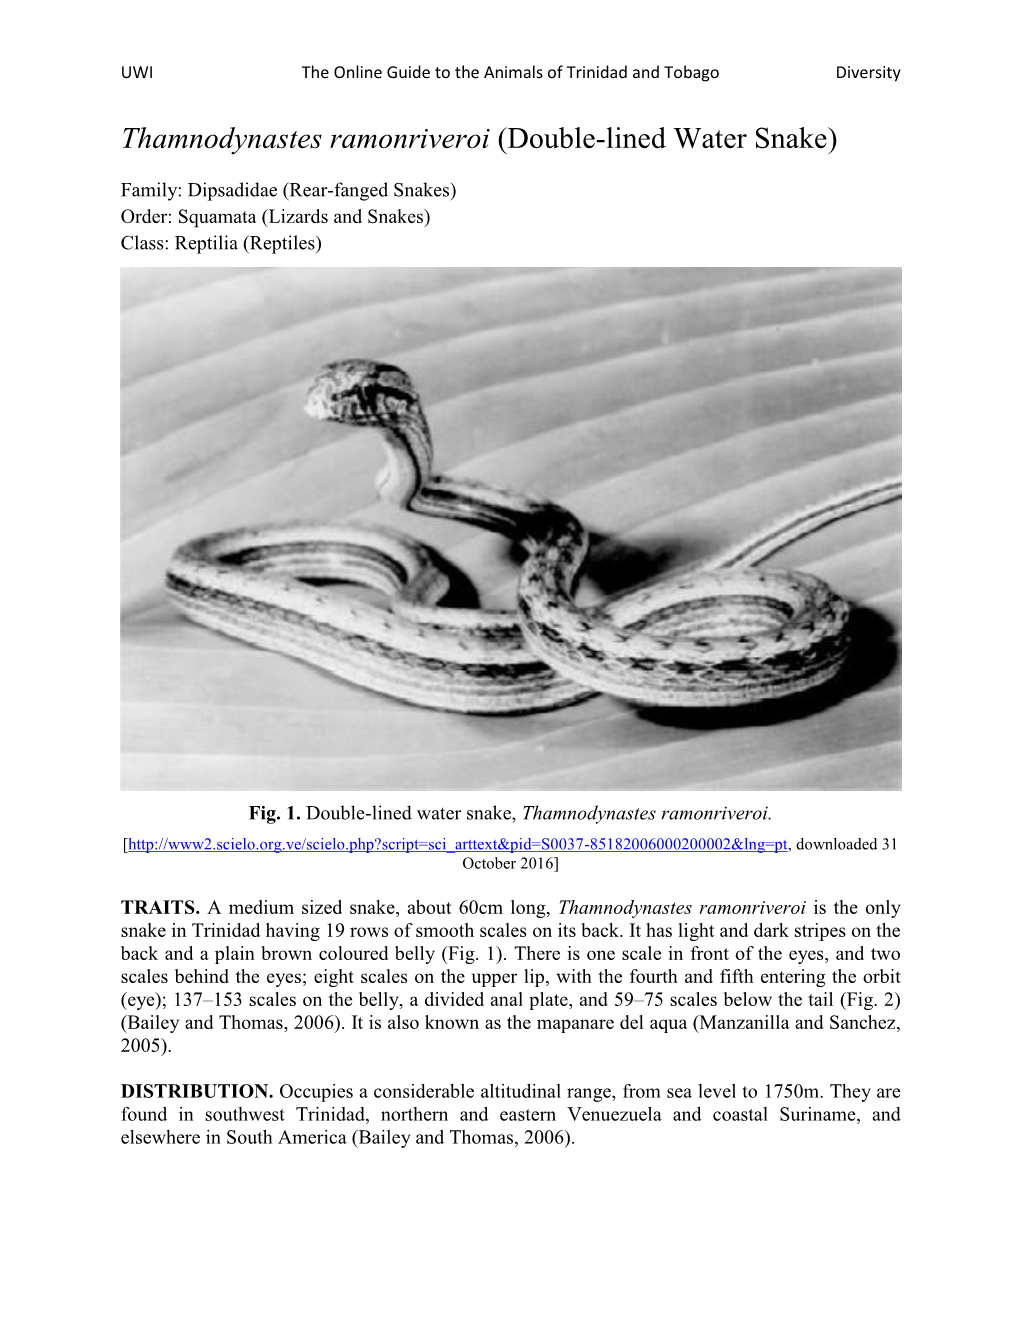 Thamnodynastes Ramonriveroi (Double-Lined Water Snake)